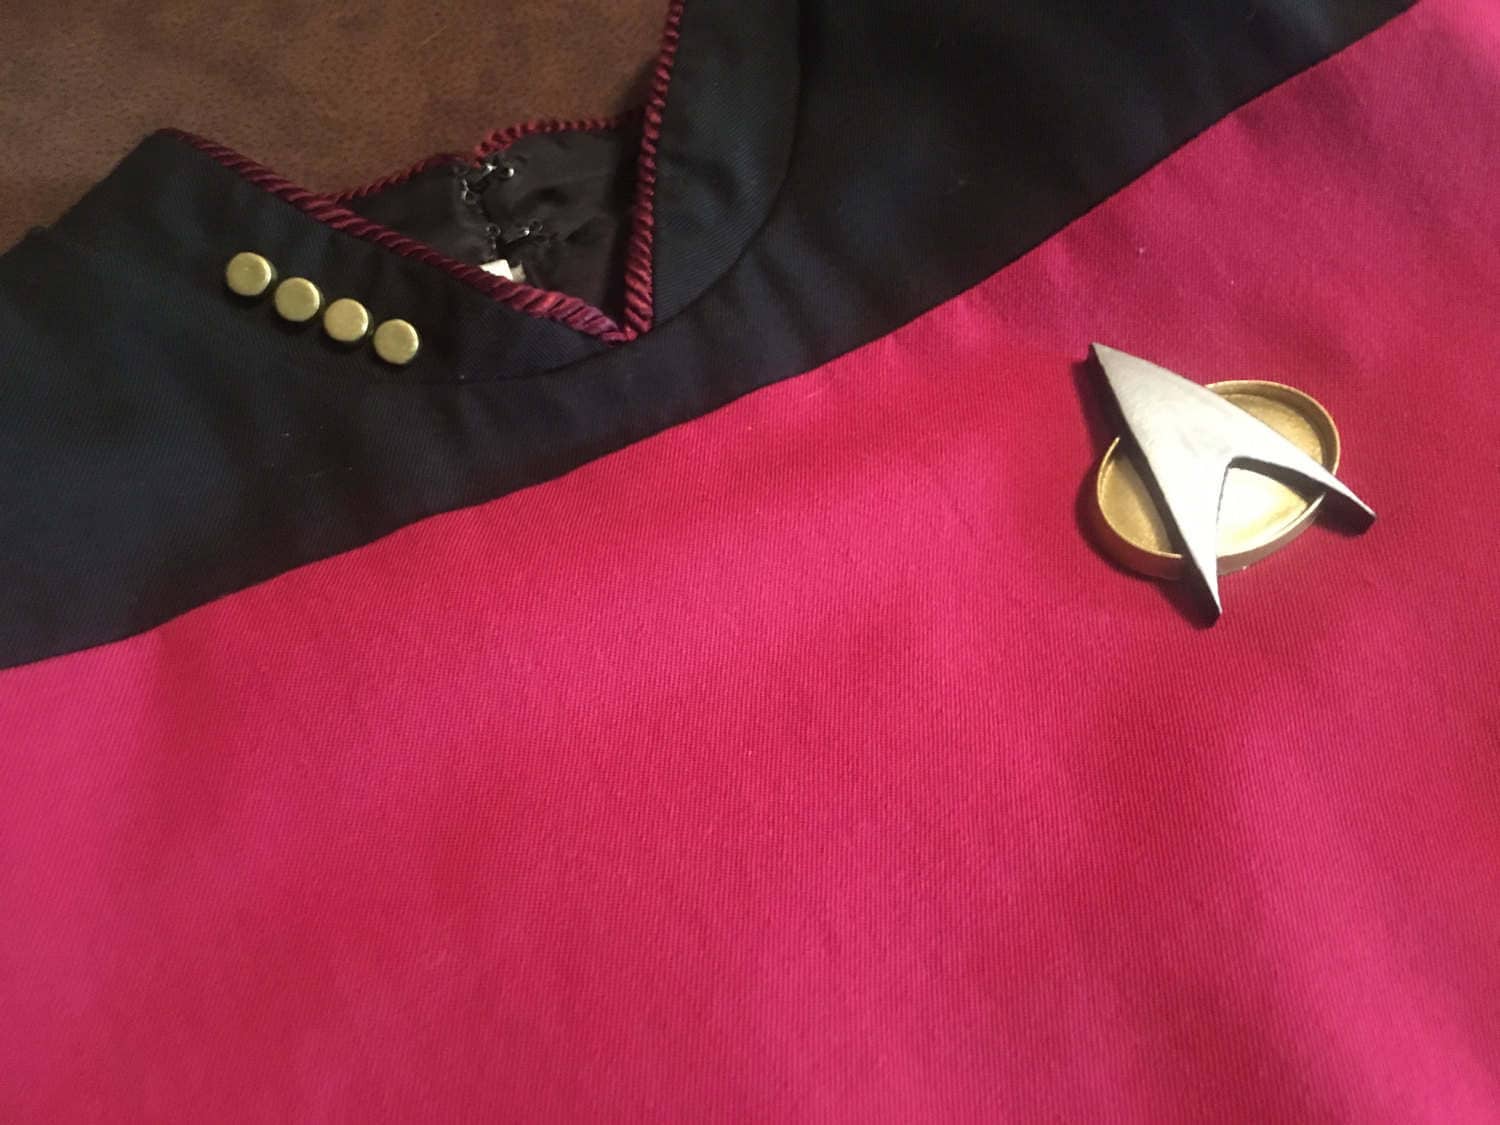 Star Trek Voyager Uniform Rank Pip Pin Insignia Badge Costume Cosplay 6 x3mm SET